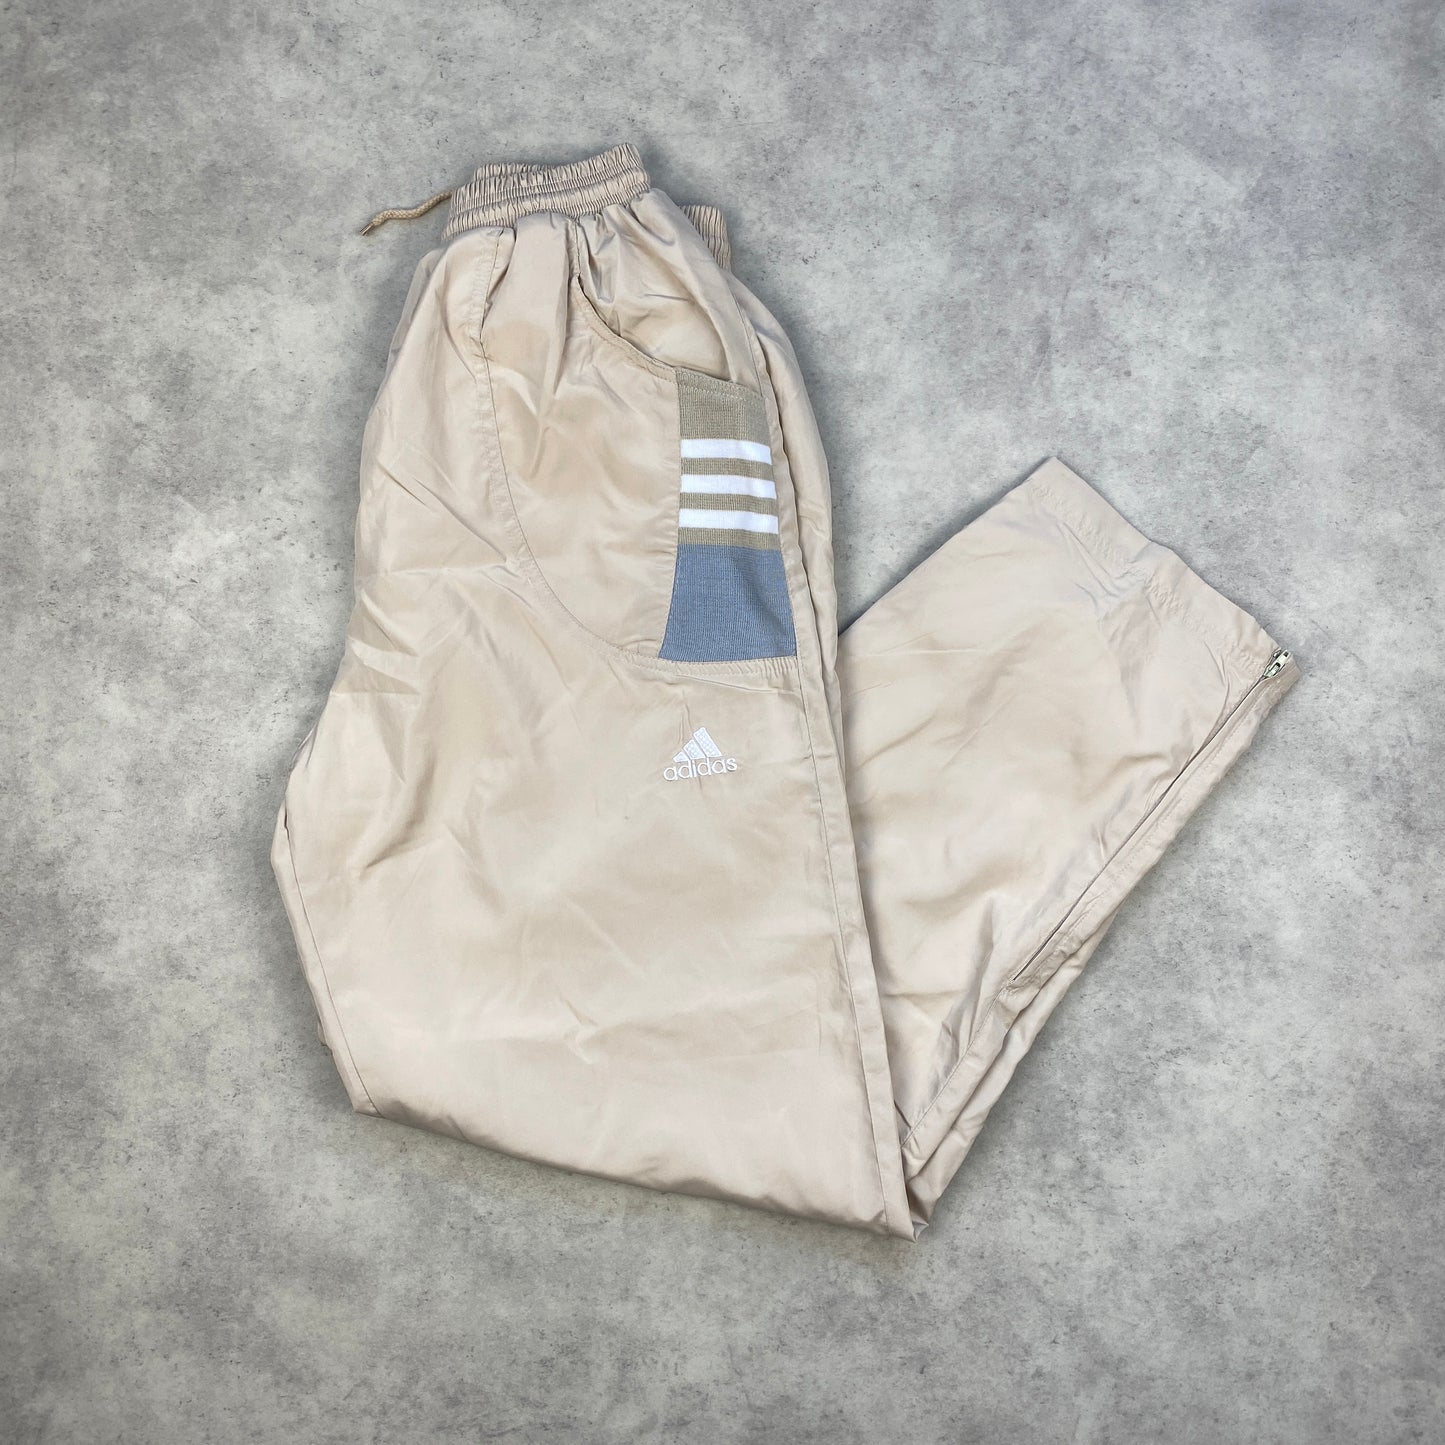 Adidas RARE track pants (L-XL)